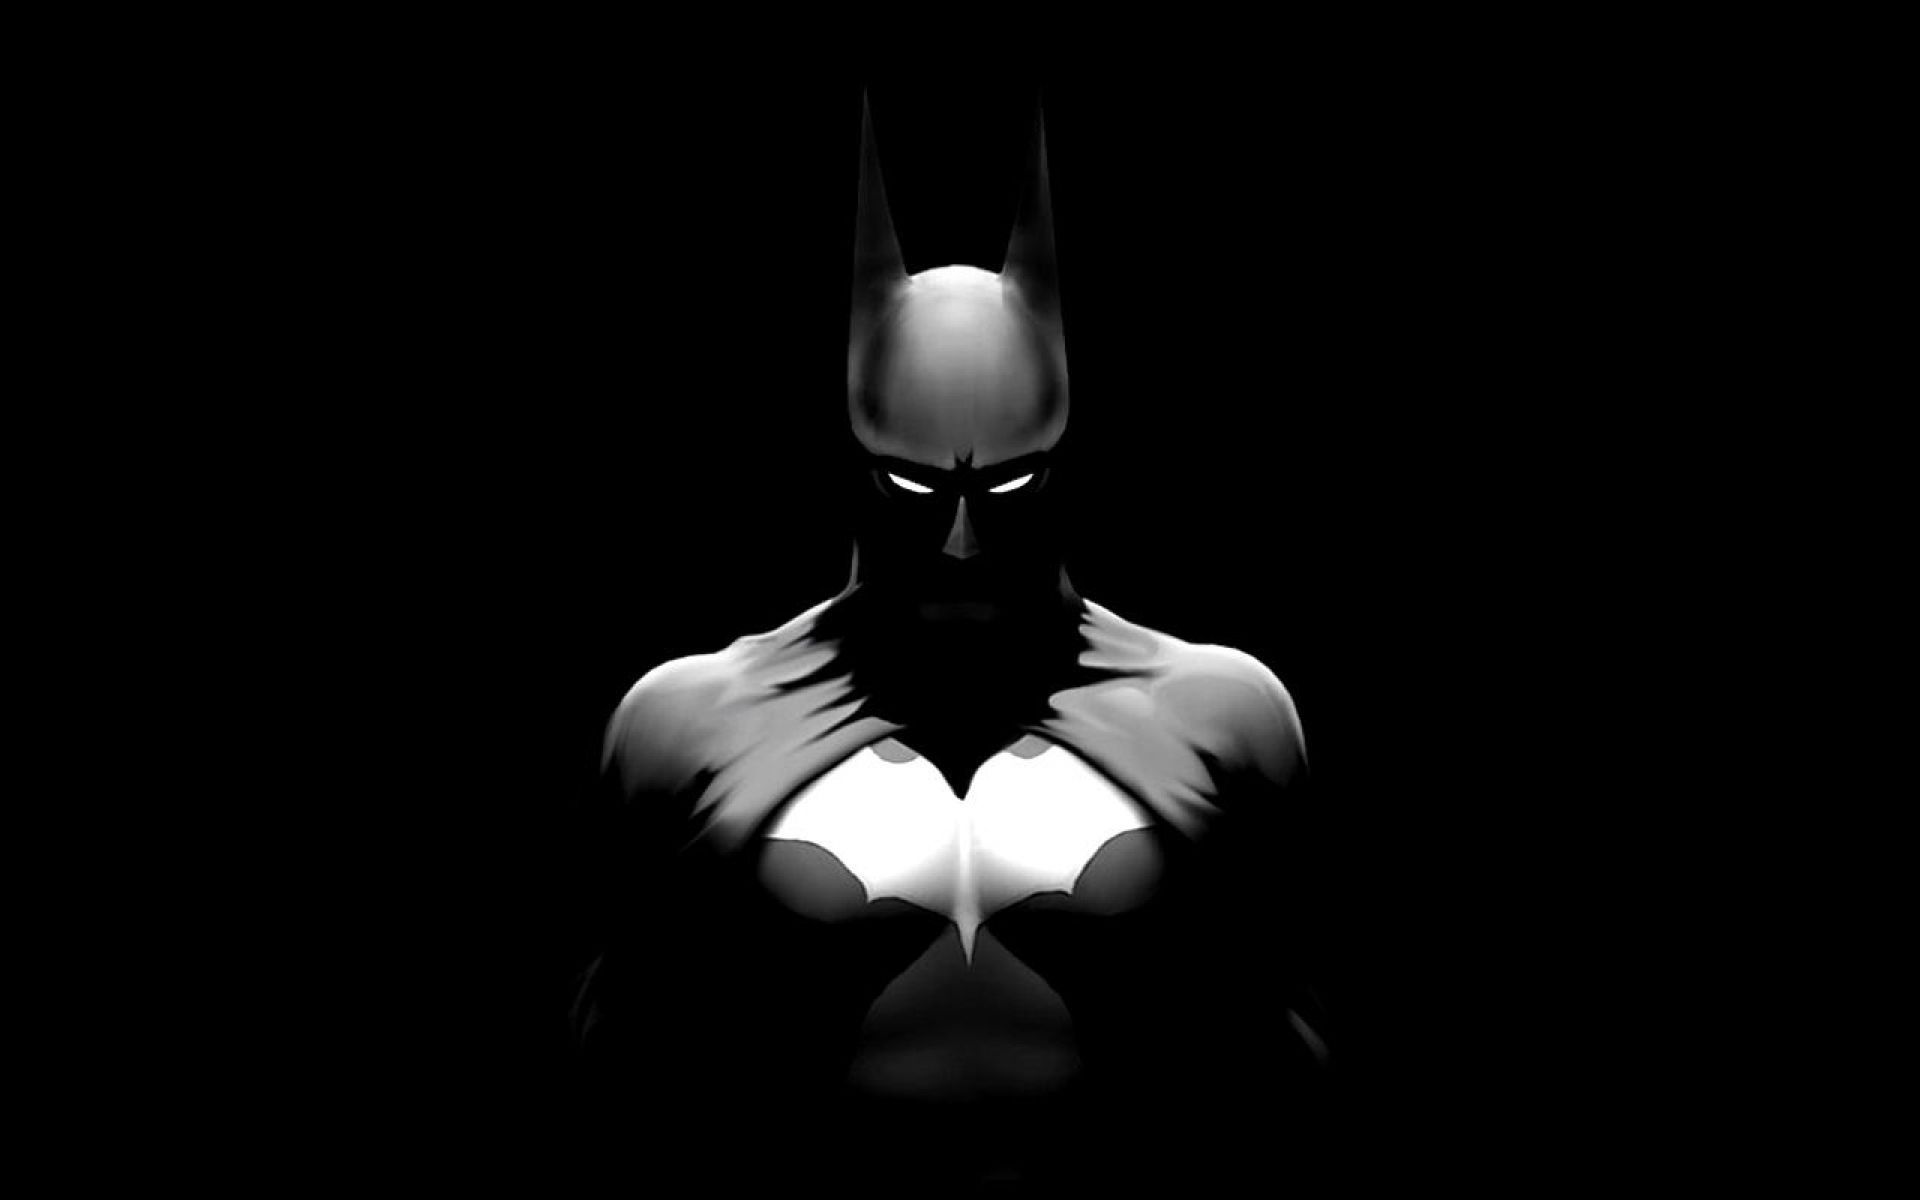 HD Batman Backgrounds